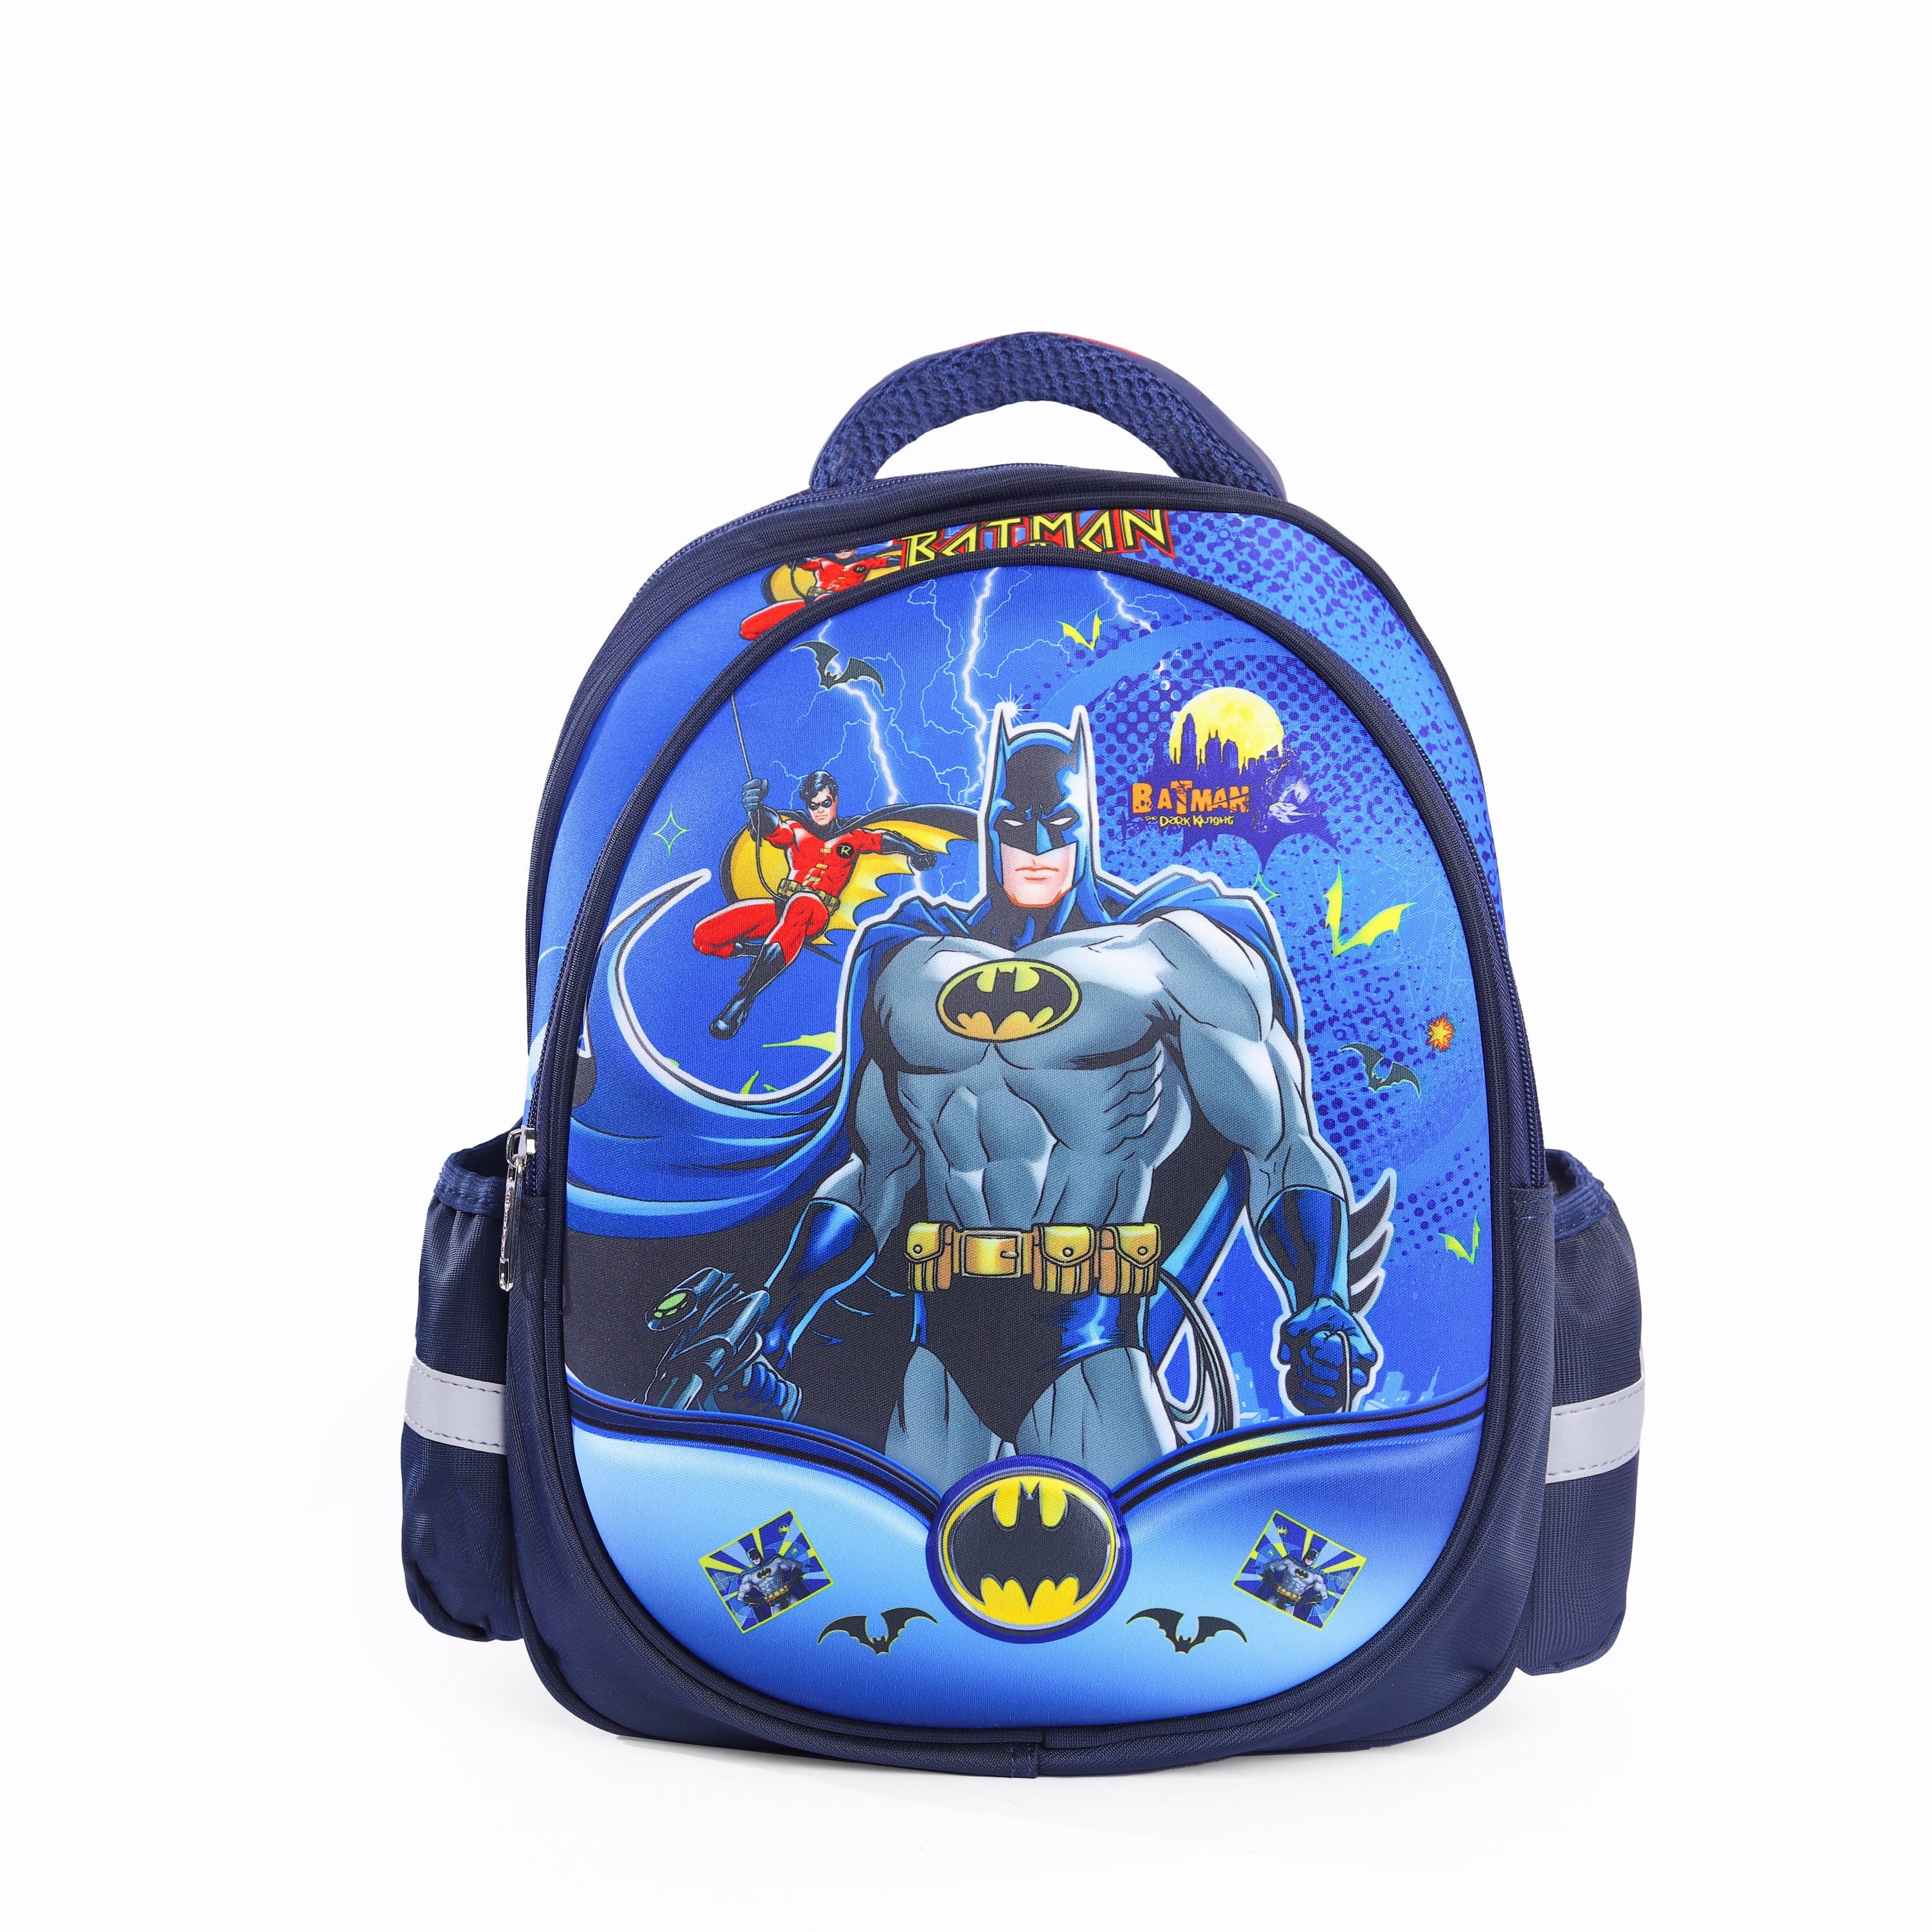 Batman II Bag For Boys